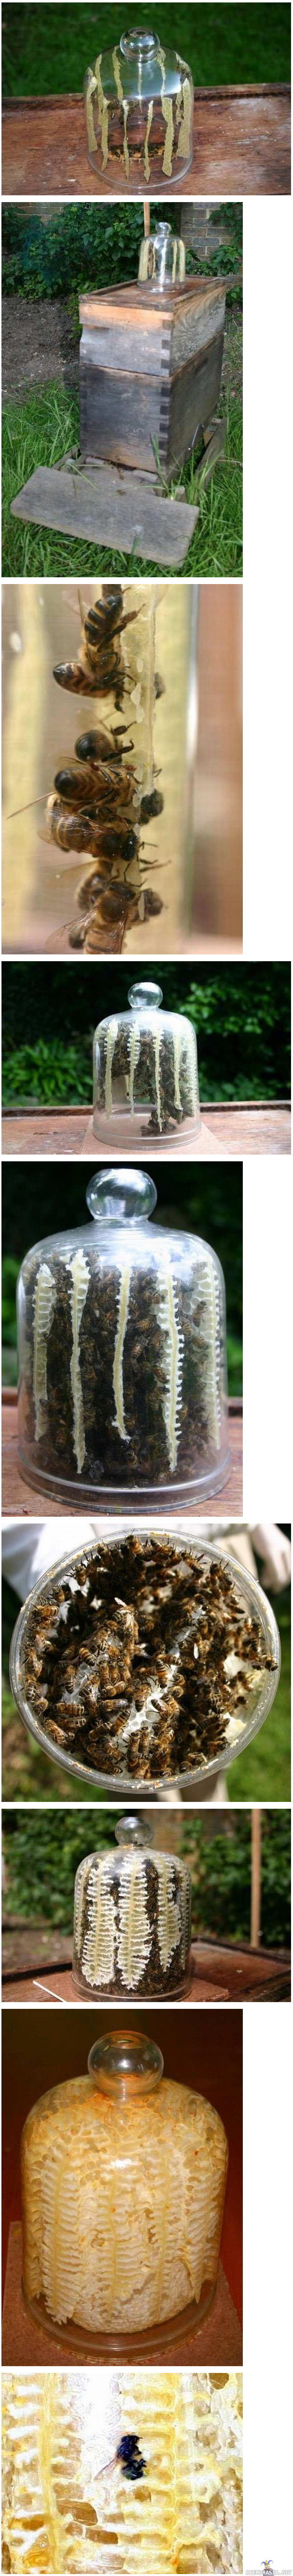 Bees make honey in jar